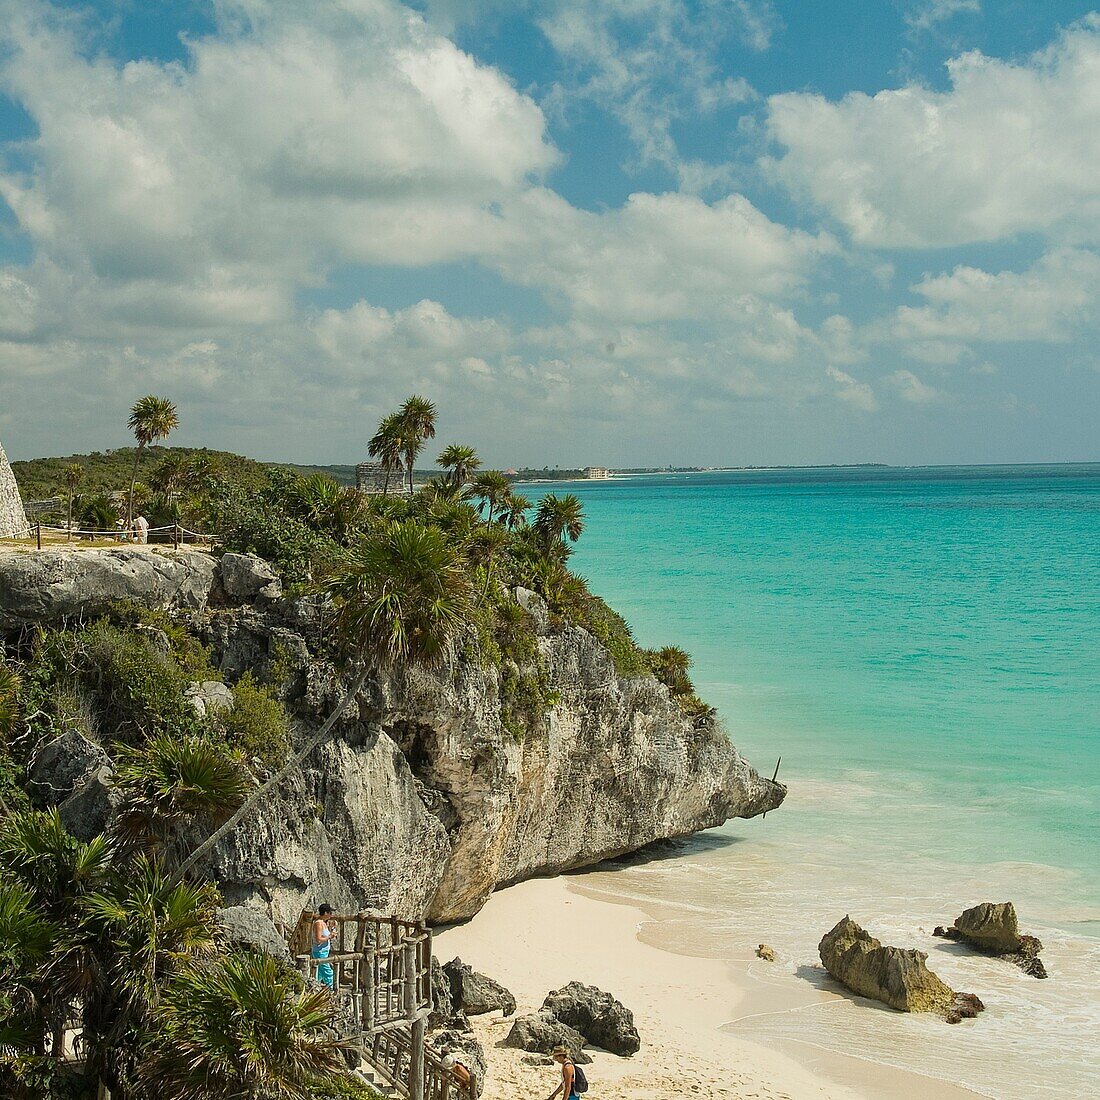 Mexico, Riviera Maya, Mayan Ruins at Tulum over looking the beach on Carribbean Sea